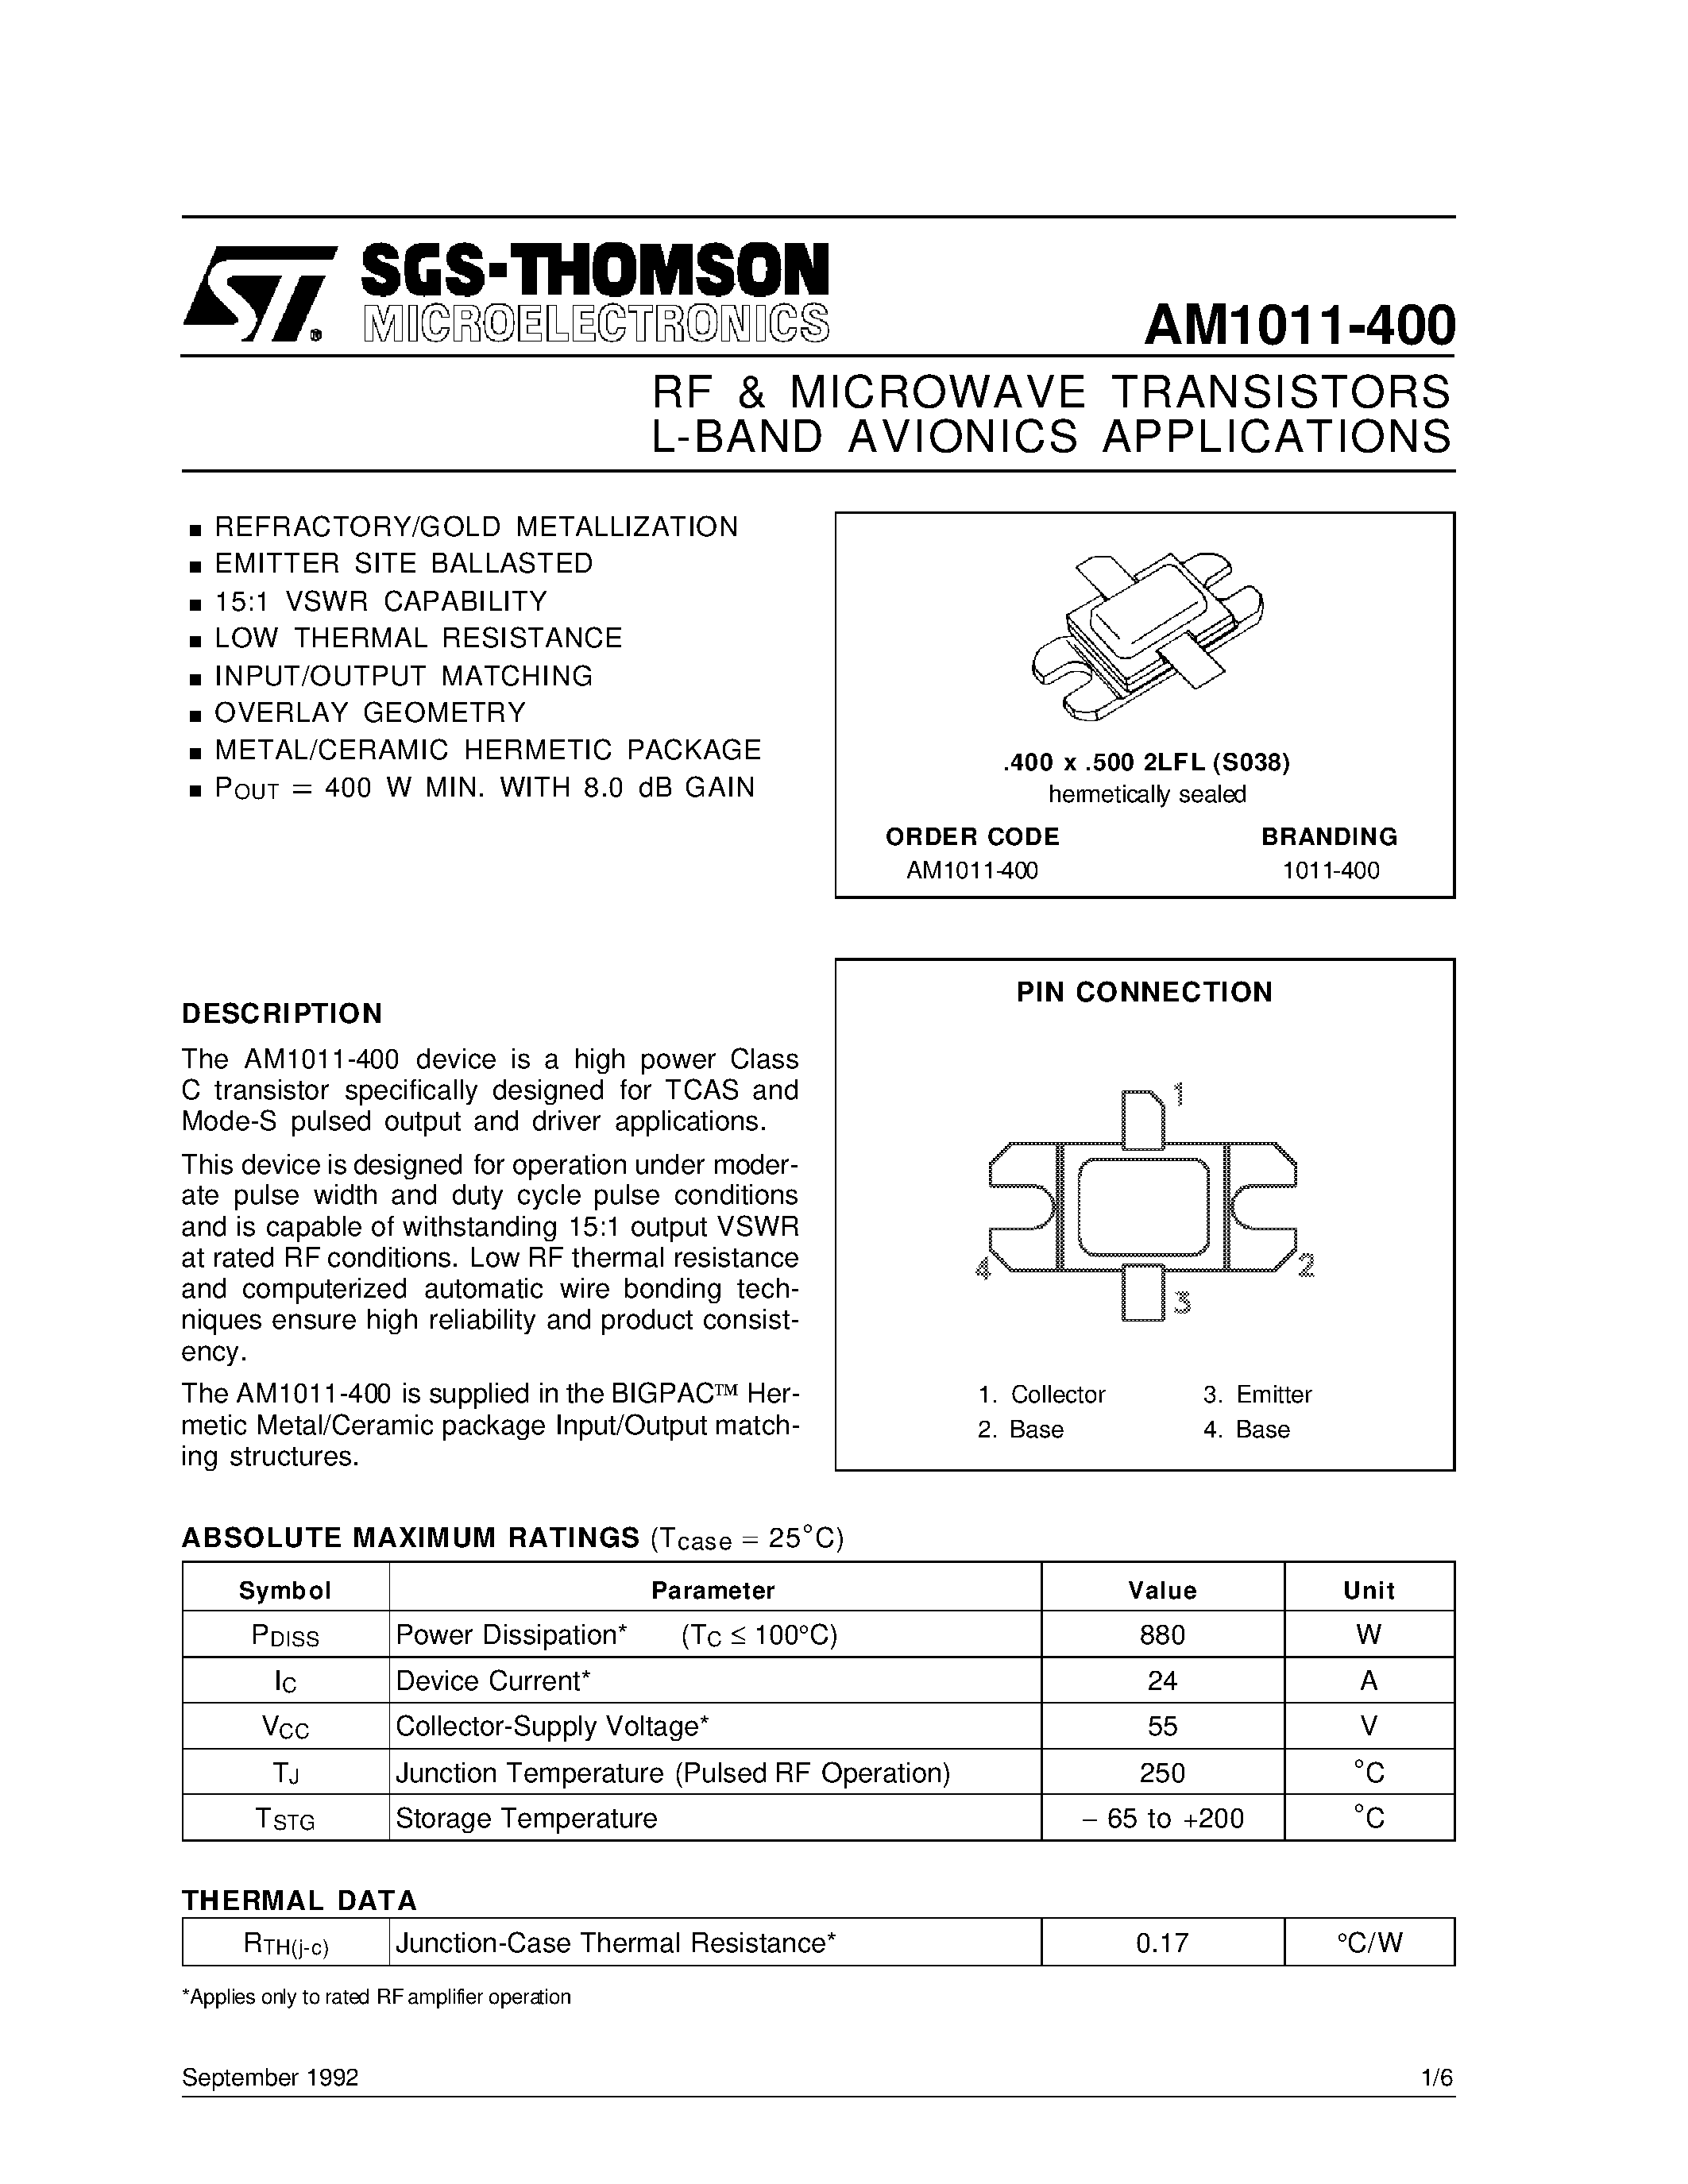 Datasheet AM1011-400 - L-BAND AVIONICS APPLICATIONS RF & MICROWAVE TRANSISTORS page 1